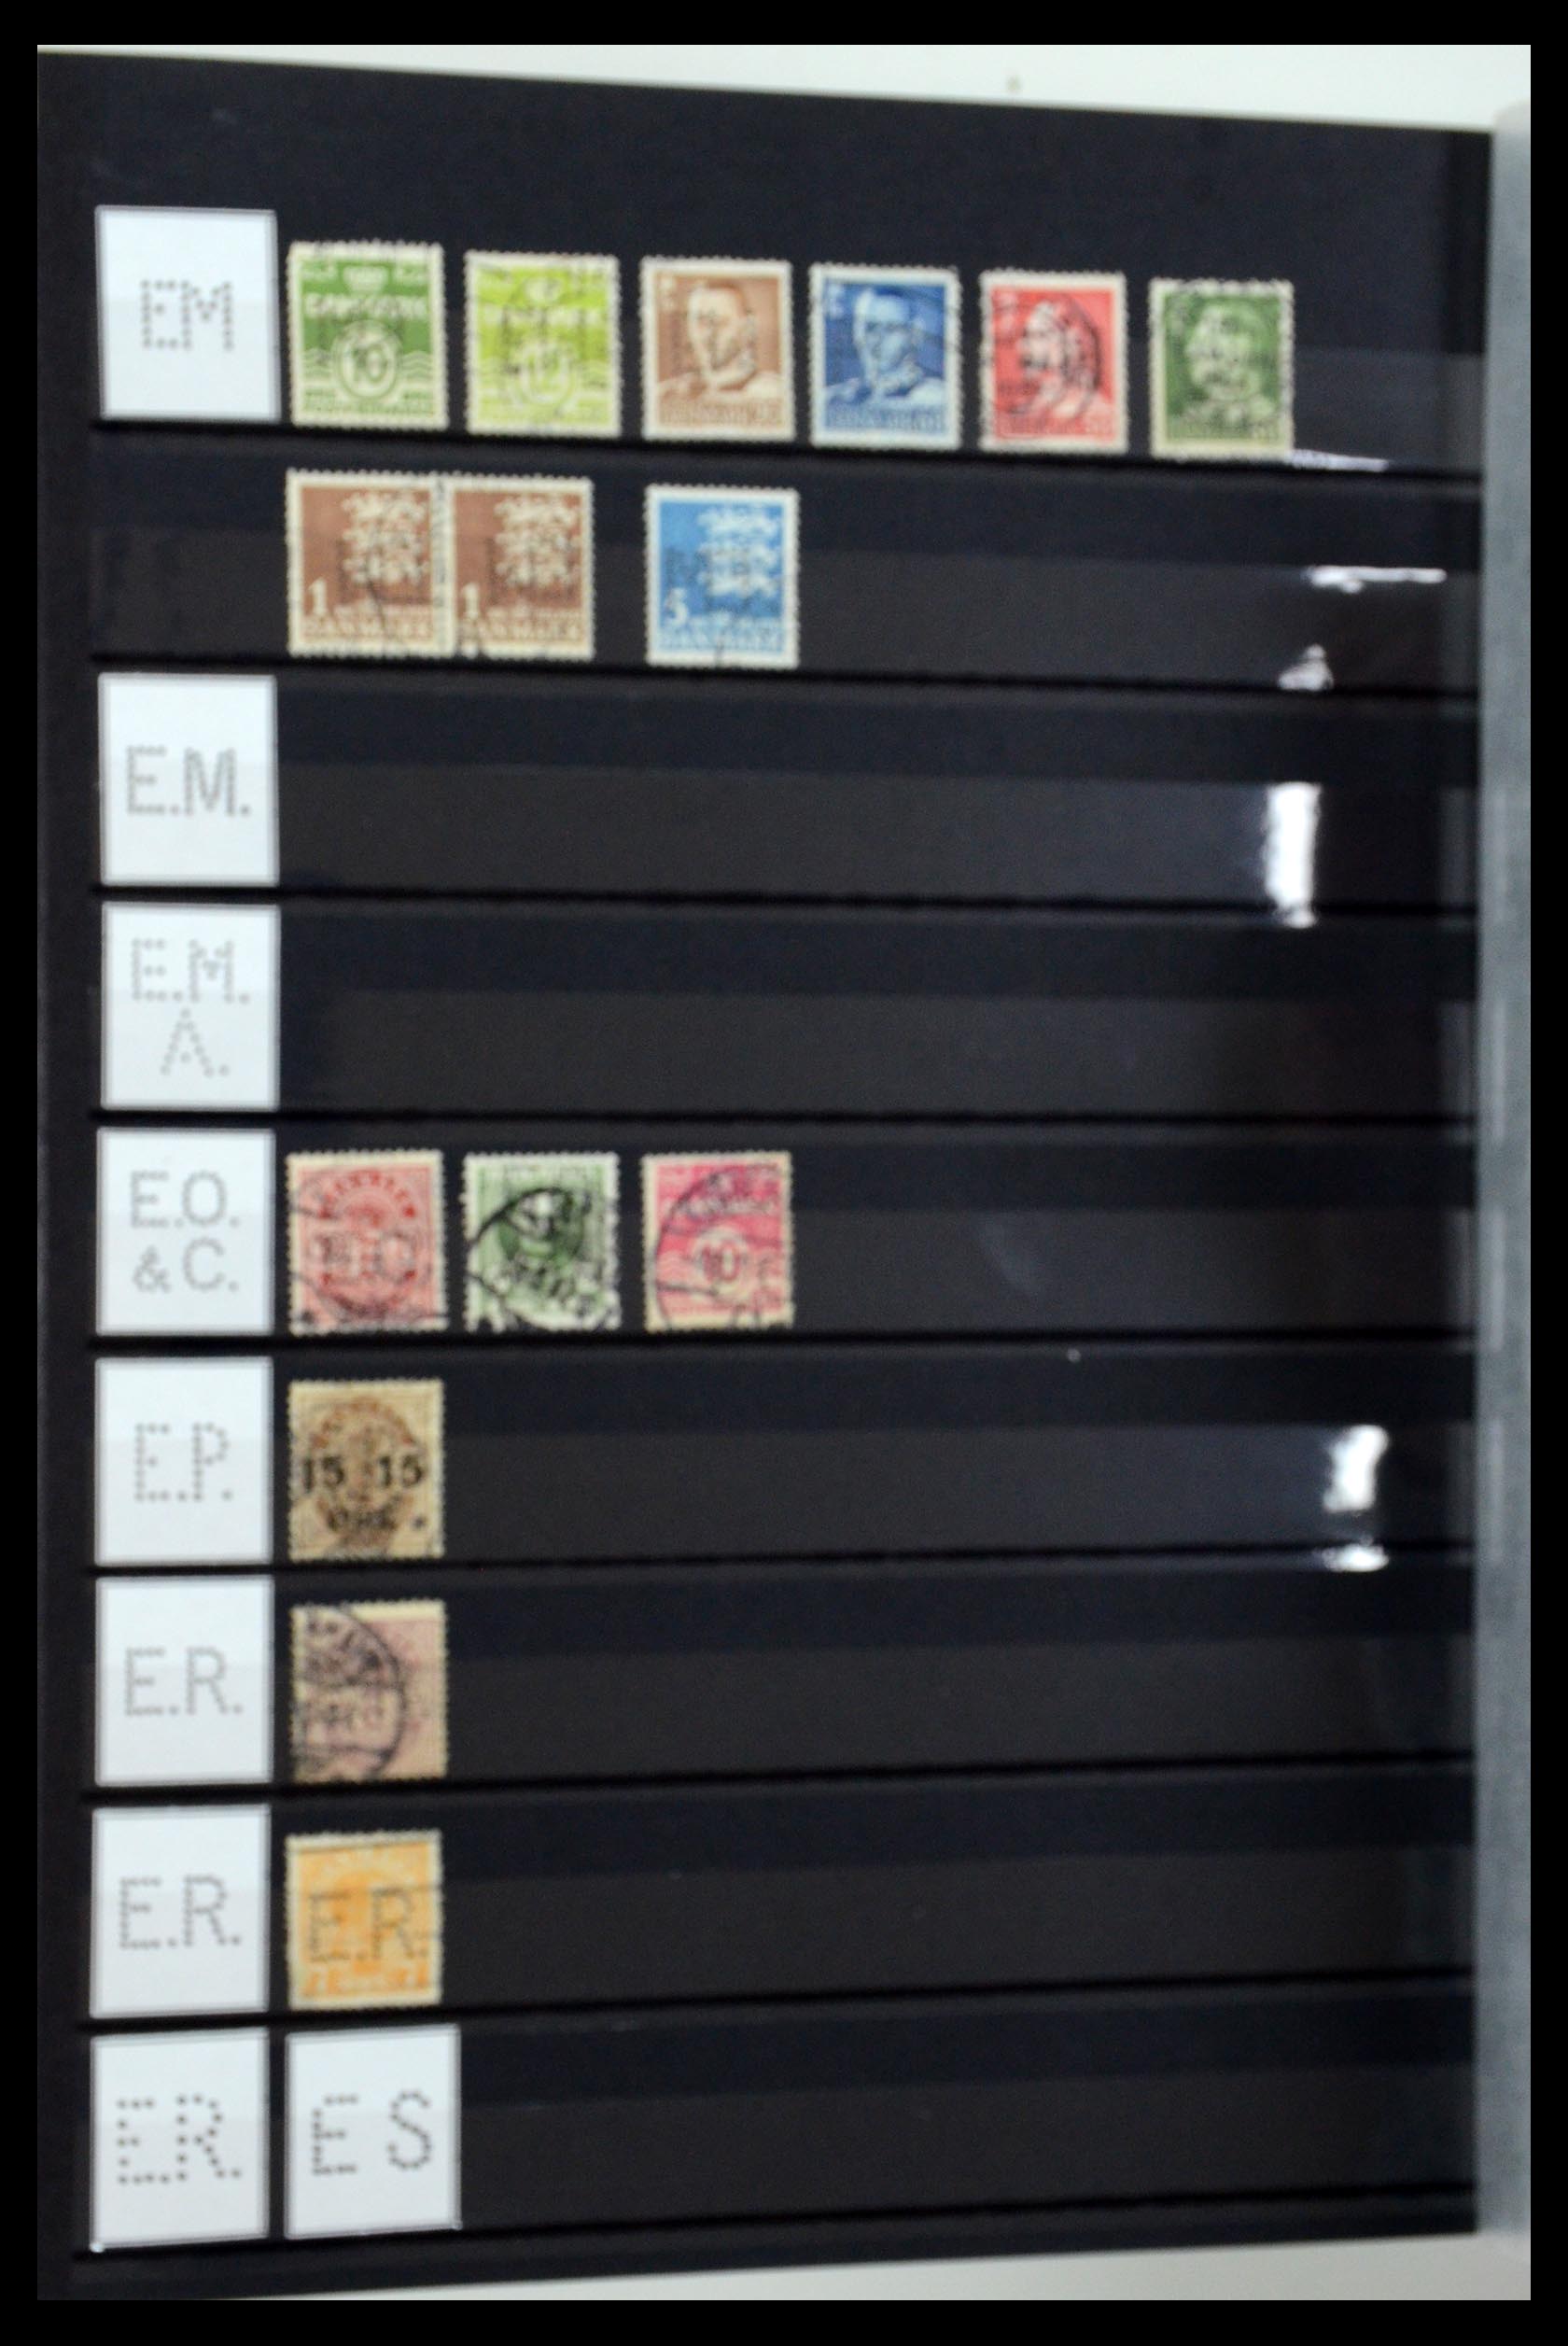 36396 045 - Stamp collection 36396 Denmark perfins.